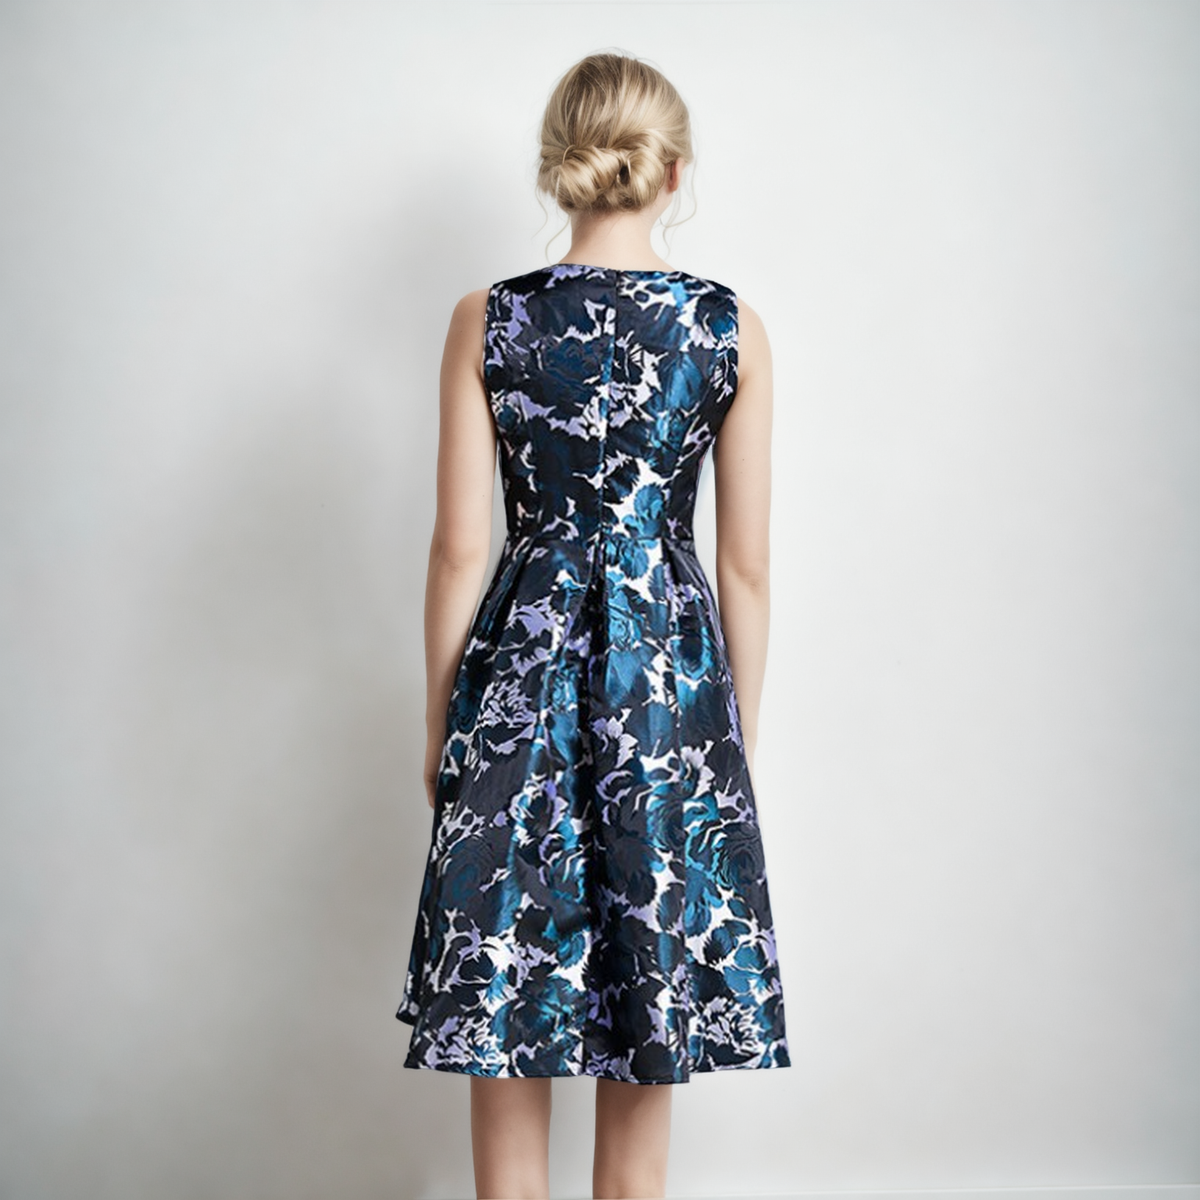 Regal Bloom: Blue Floral Jacquard Sleeveless Dress - StylinArts